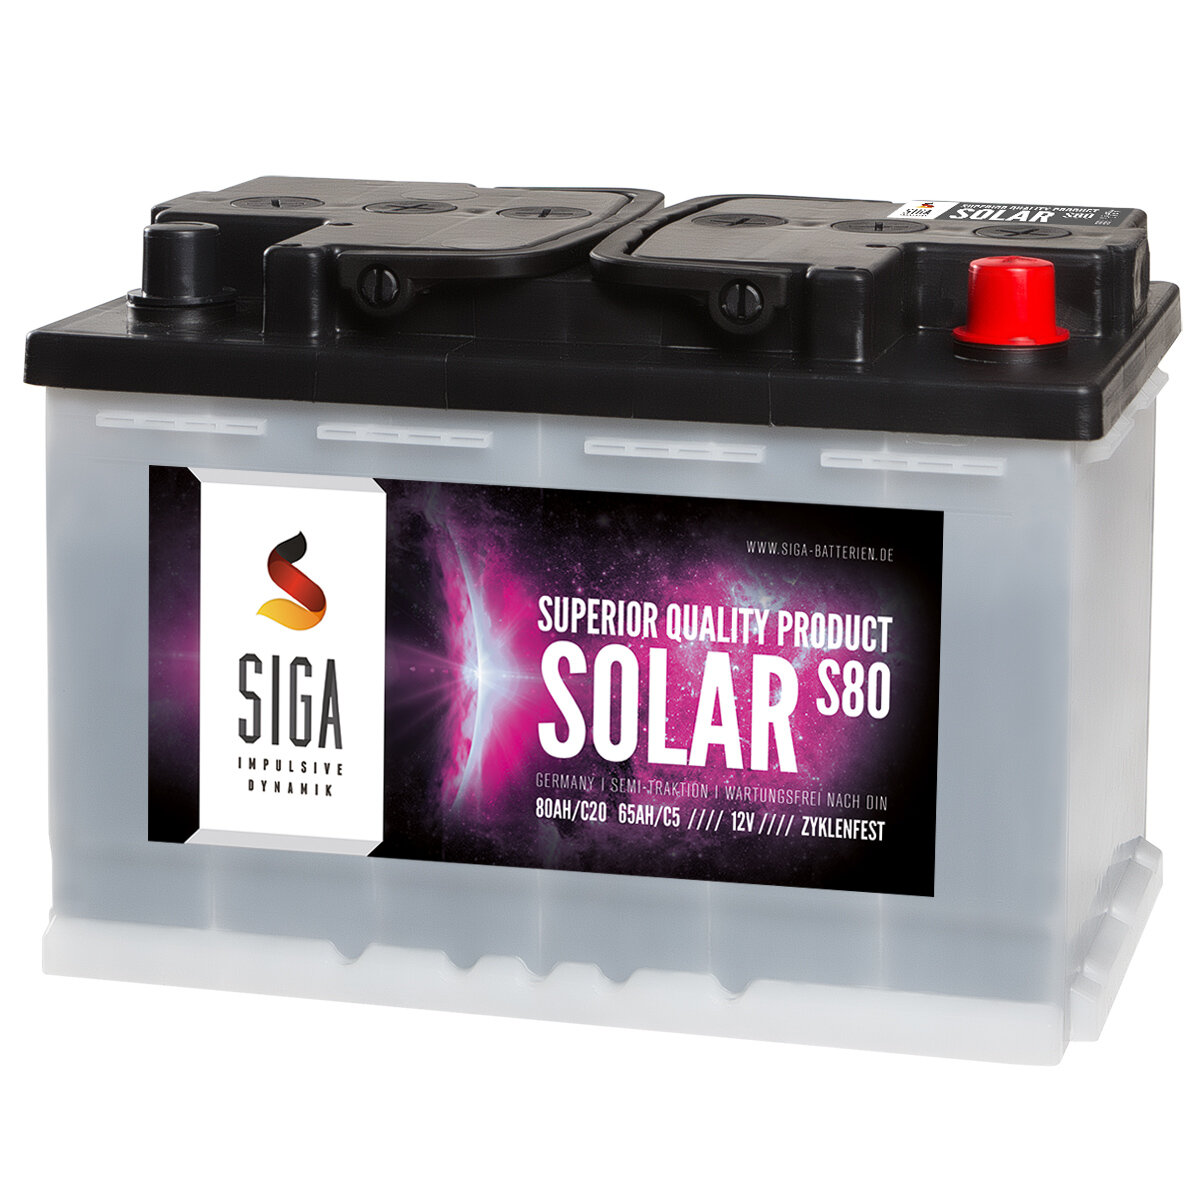 Langzeit Solarbatterie 100Ah 12V, 99,08 €